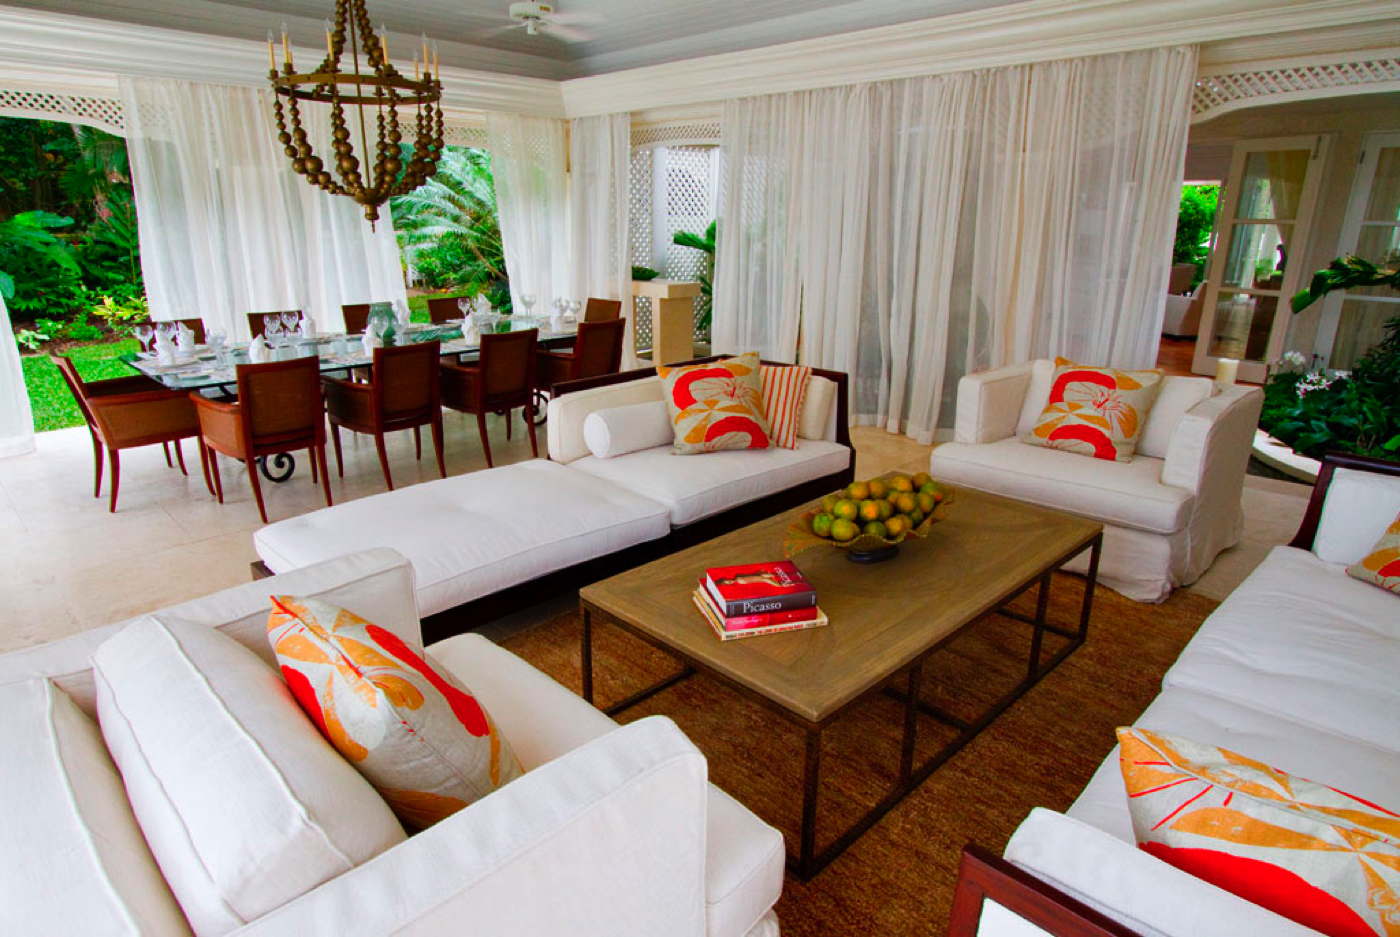 Luxury rental villa Roaring Pavilion in Jamaica - DOMIZILE REISEN